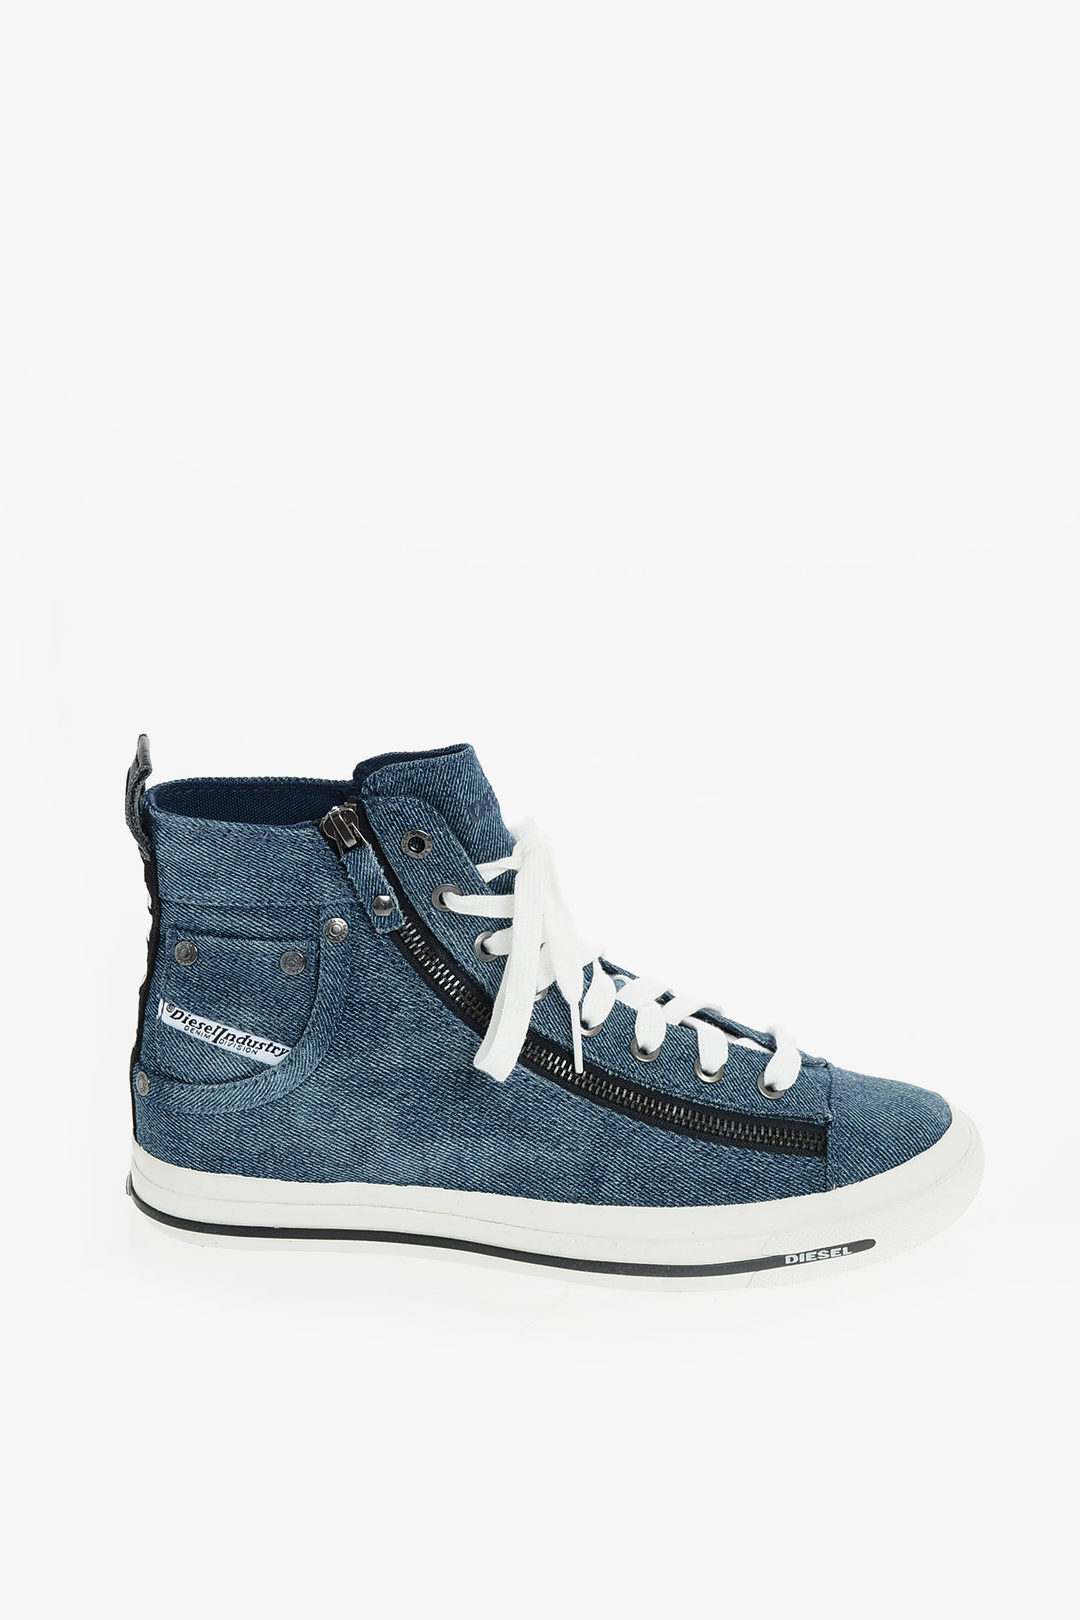 Levi's Women's Stan G Sneakers Comfort Tech Dark Blue Denim size 6.5 #  1083926 | eBay